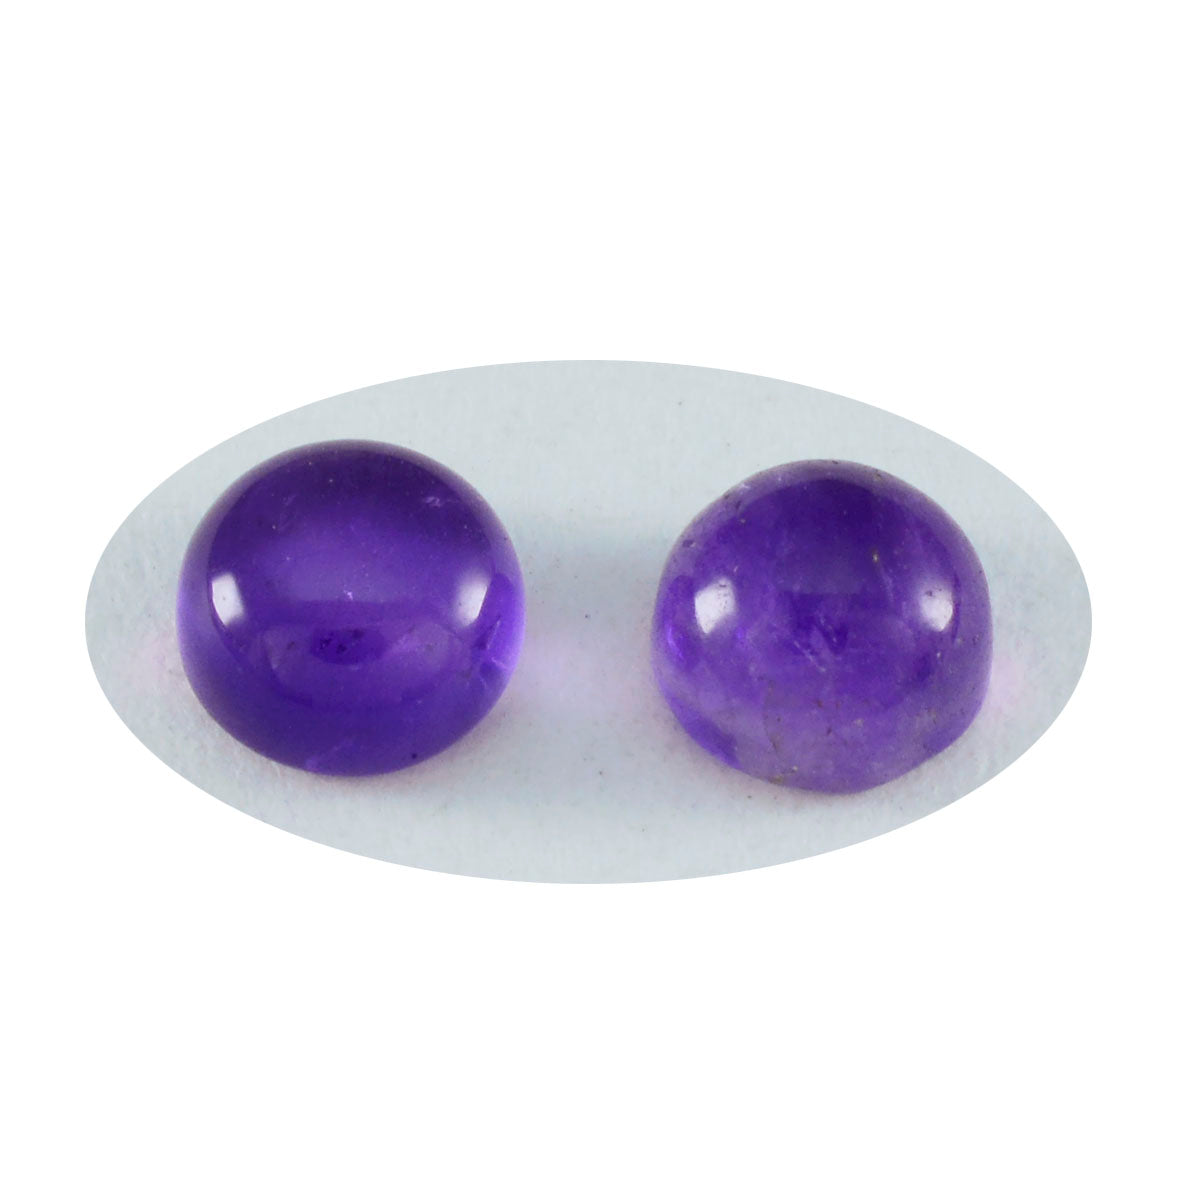 Riyogems 1PC Purple Amethyst Cabochon 7x7 mm Round Shape amazing Quality Loose Gemstone